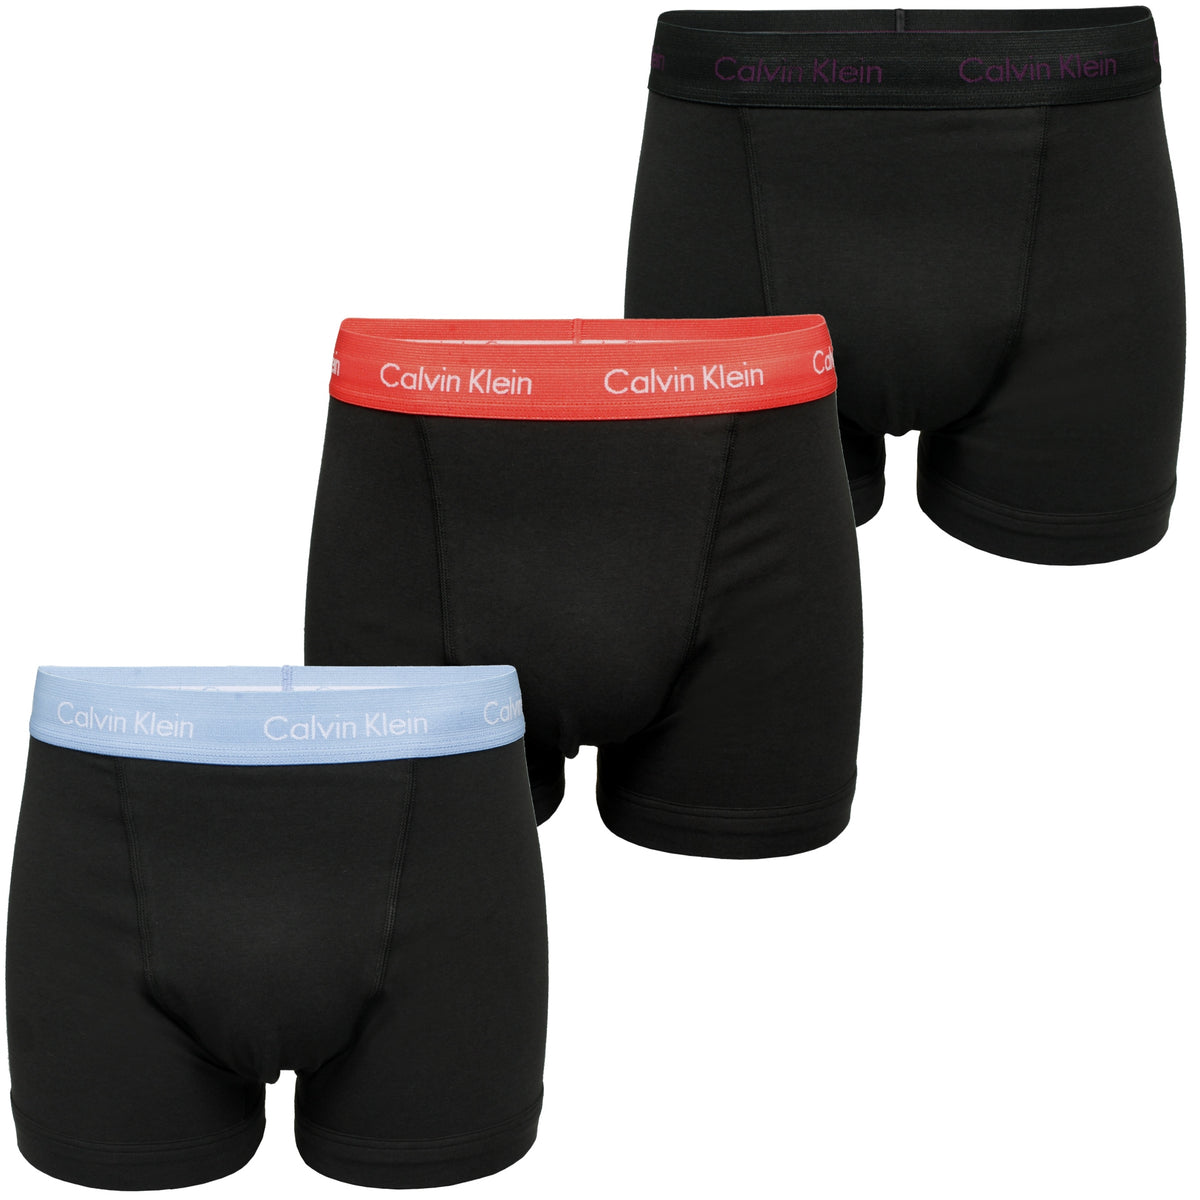 Calvin Klein Men's Cotton Stretch Boxer Shorts (3-Pack), 05, U2662G-S21, Black - Citrina/ Blue Burst/ Strawb Field